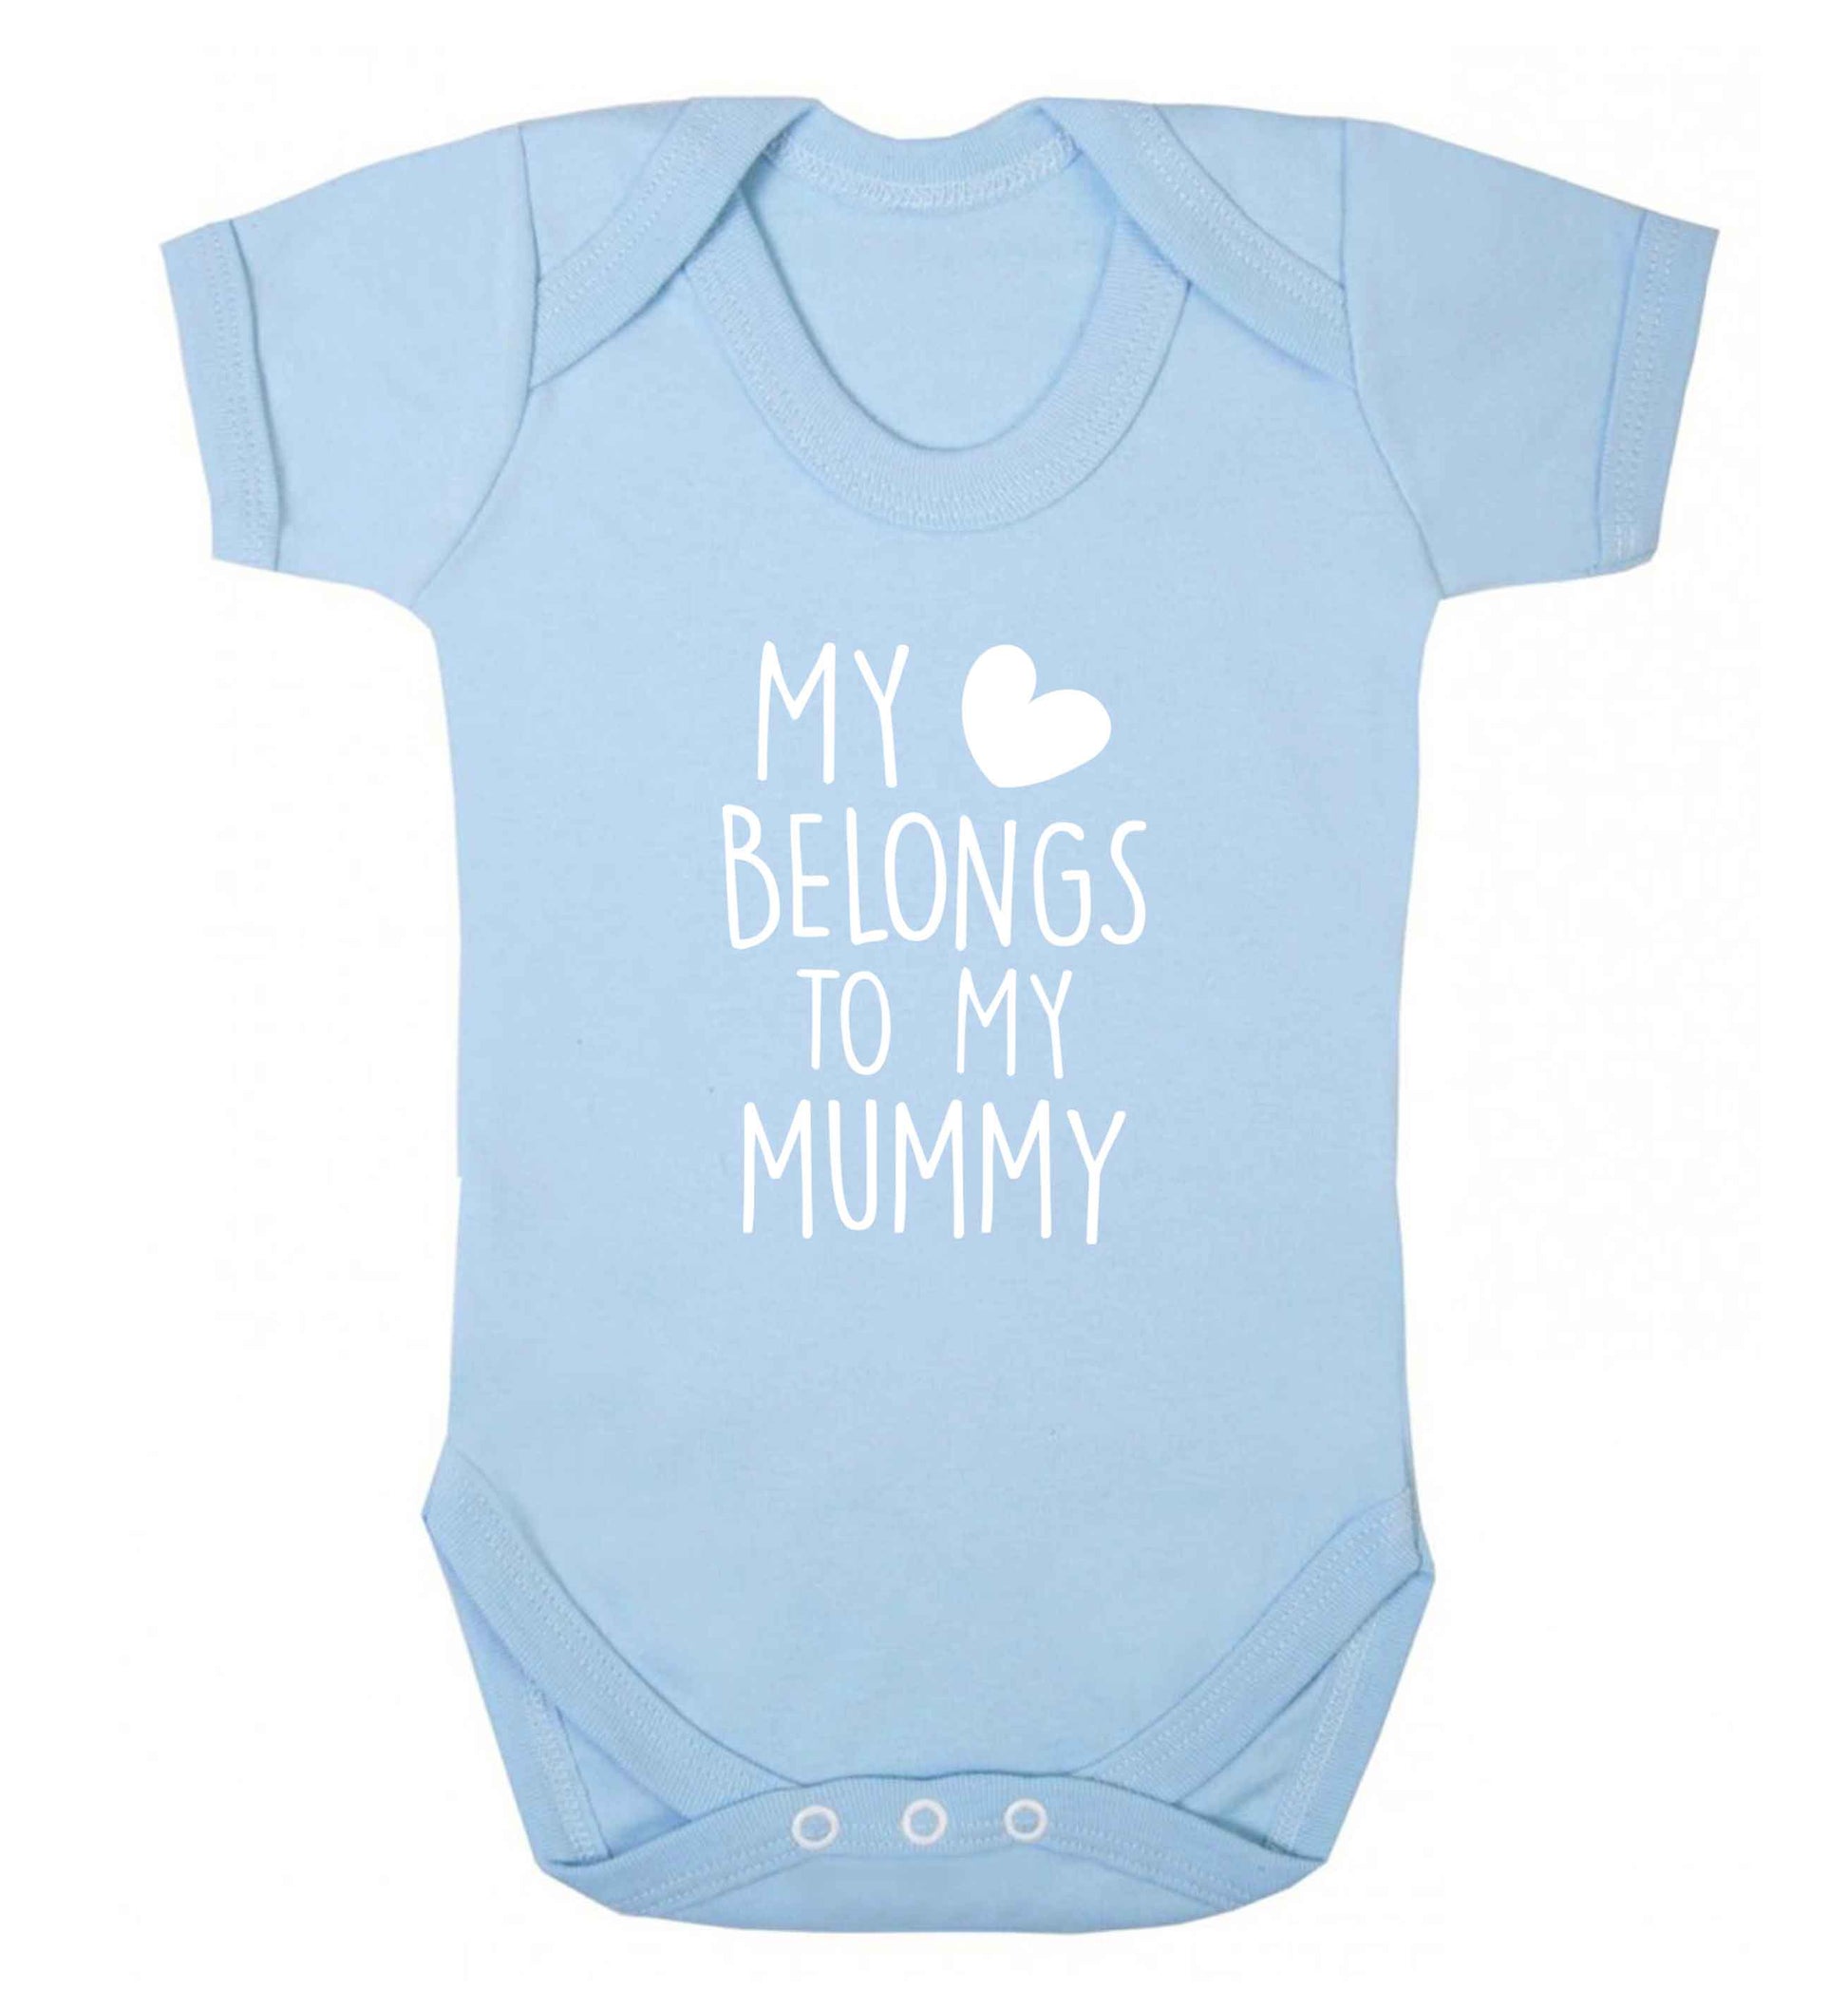 My heart belongs to my mummy baby vest pale blue 18-24 months